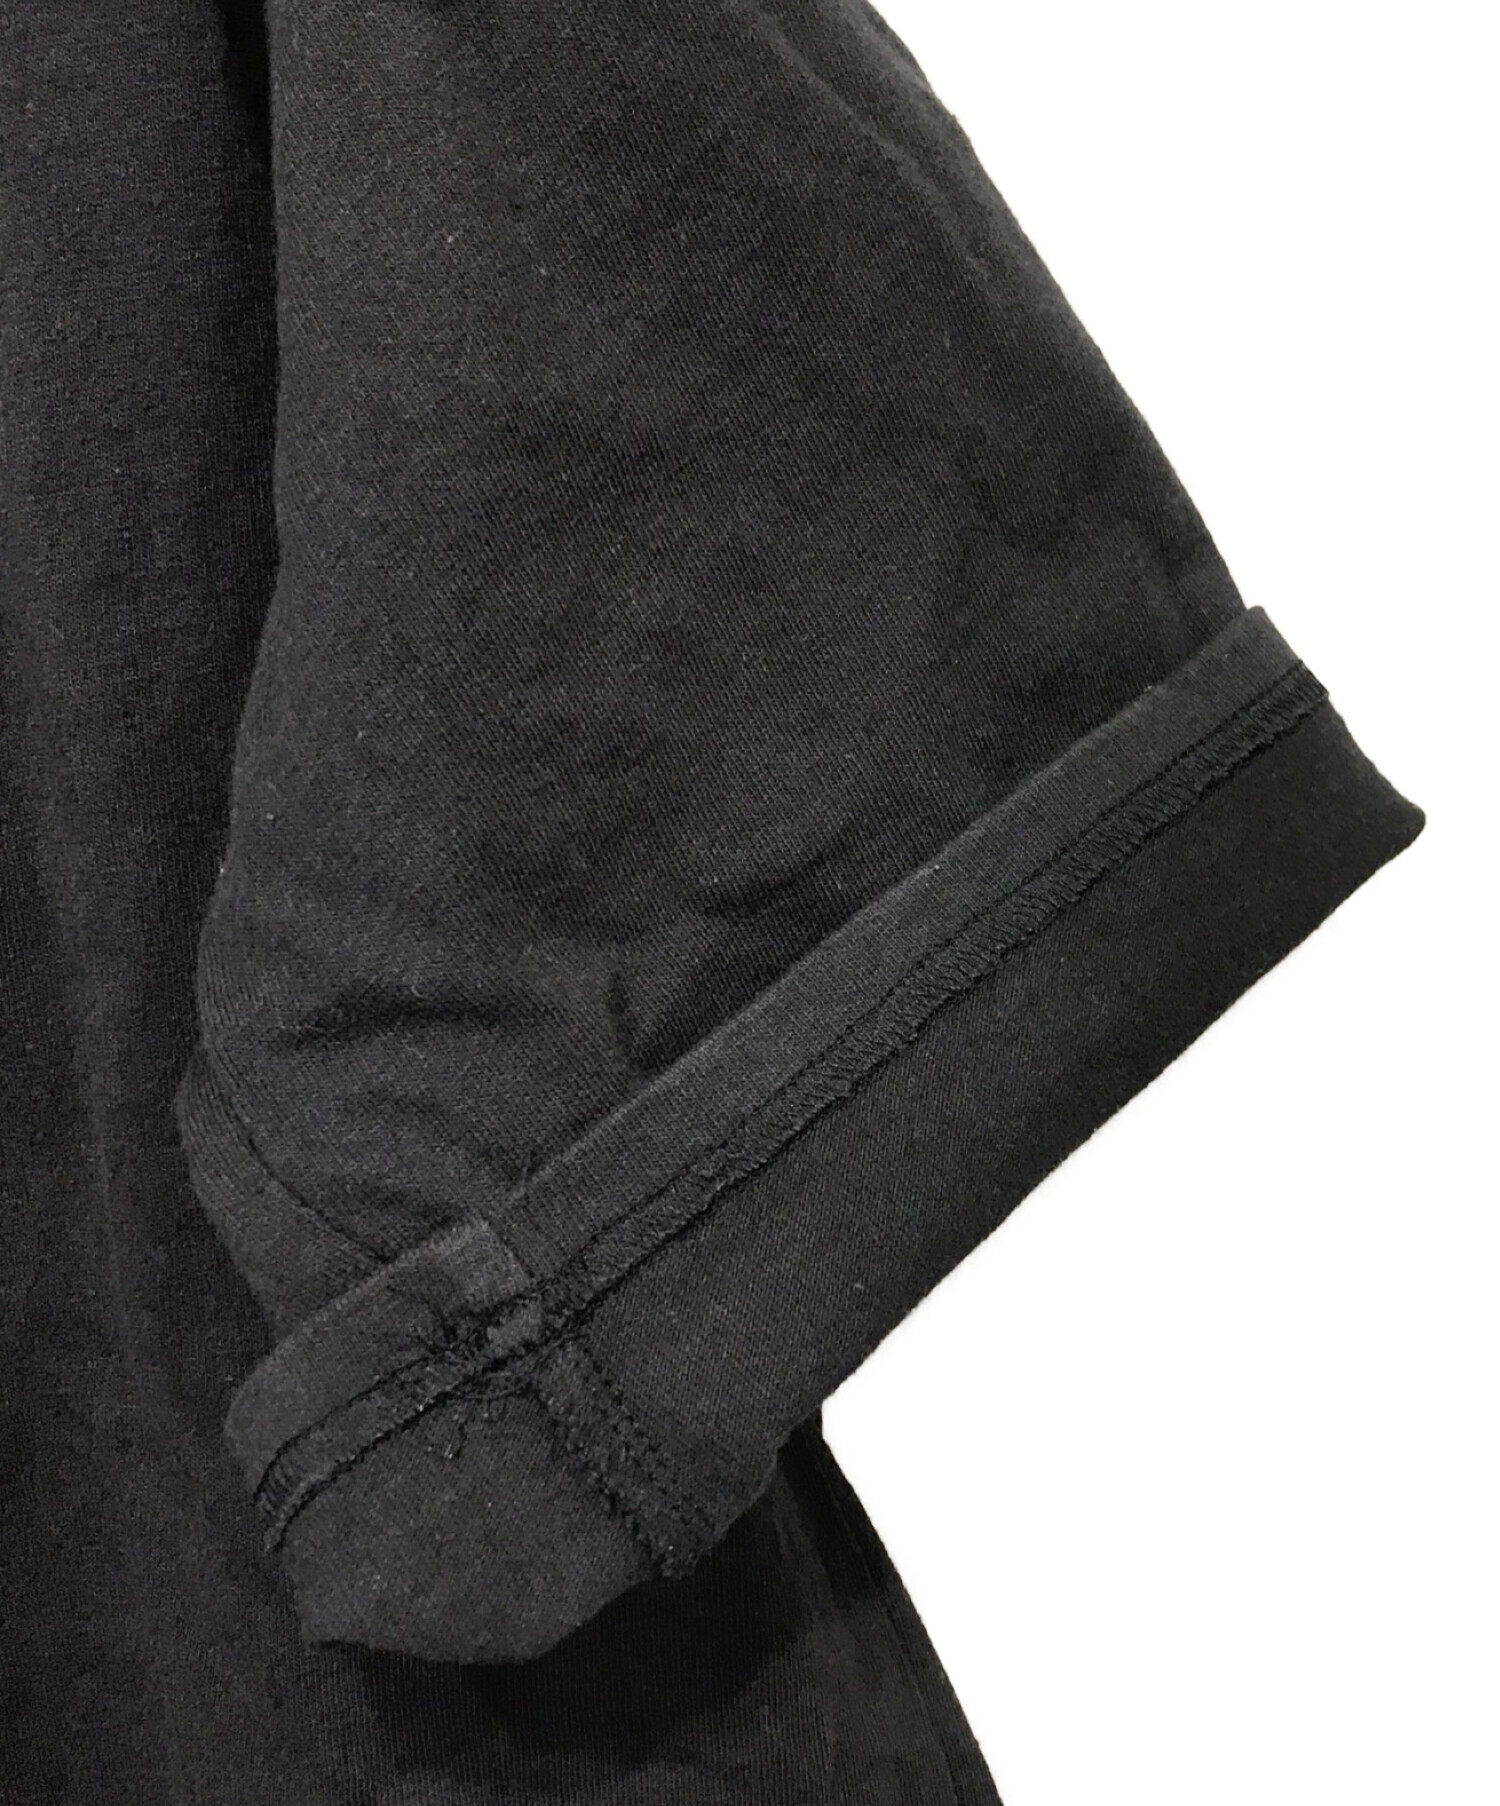 DAIRIKU (ダイリク) BEACH Half-Sleeve Tee 刺繍デザインTシャツ ブラック サイズ:F